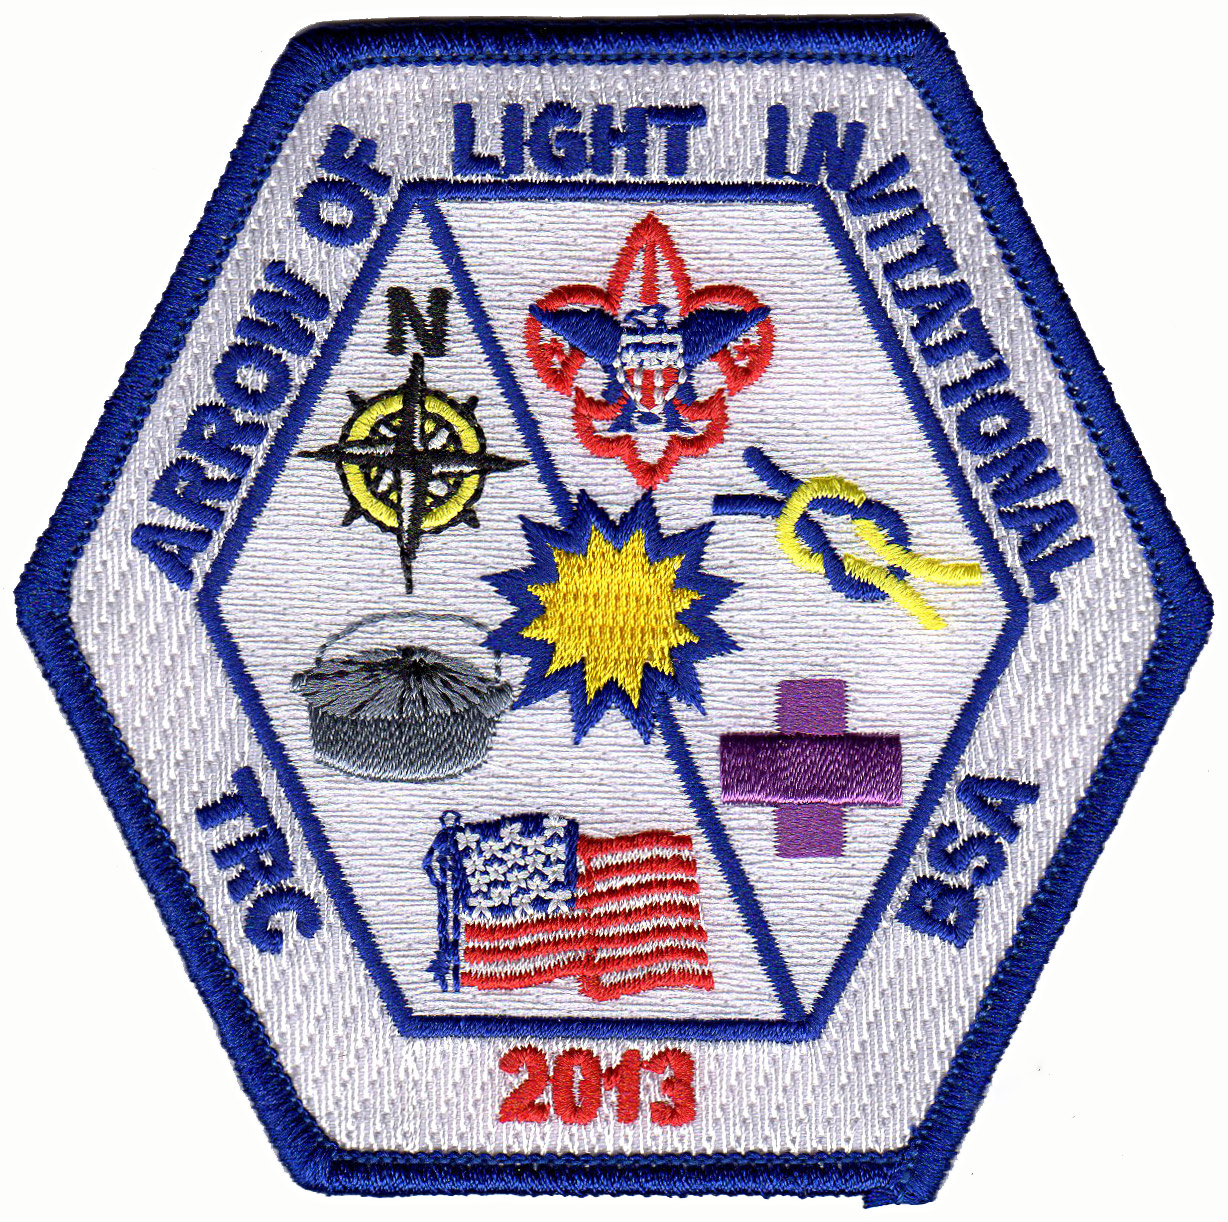 2013 Arrow of Light Invitational